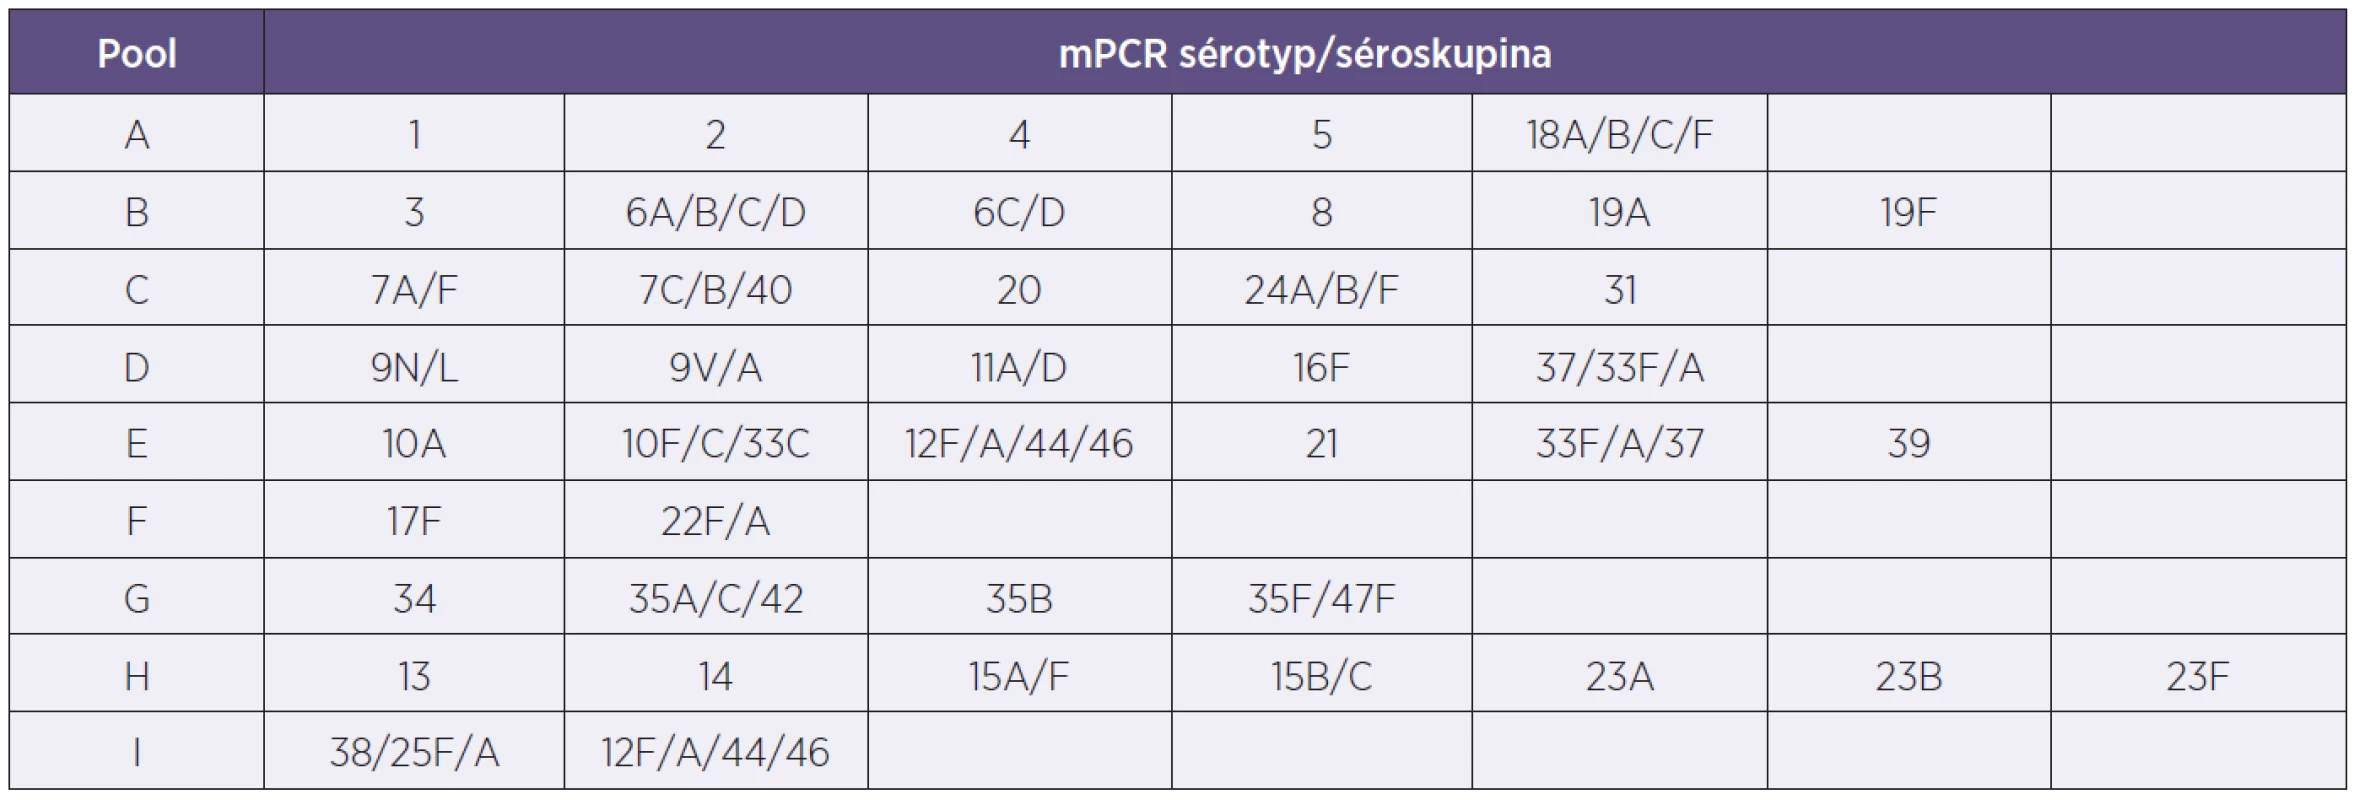 Tabulka sérotypového složení mPCR směsí pro PCR reakce
Table 2. Table of serotypes included in the mPCR mixes